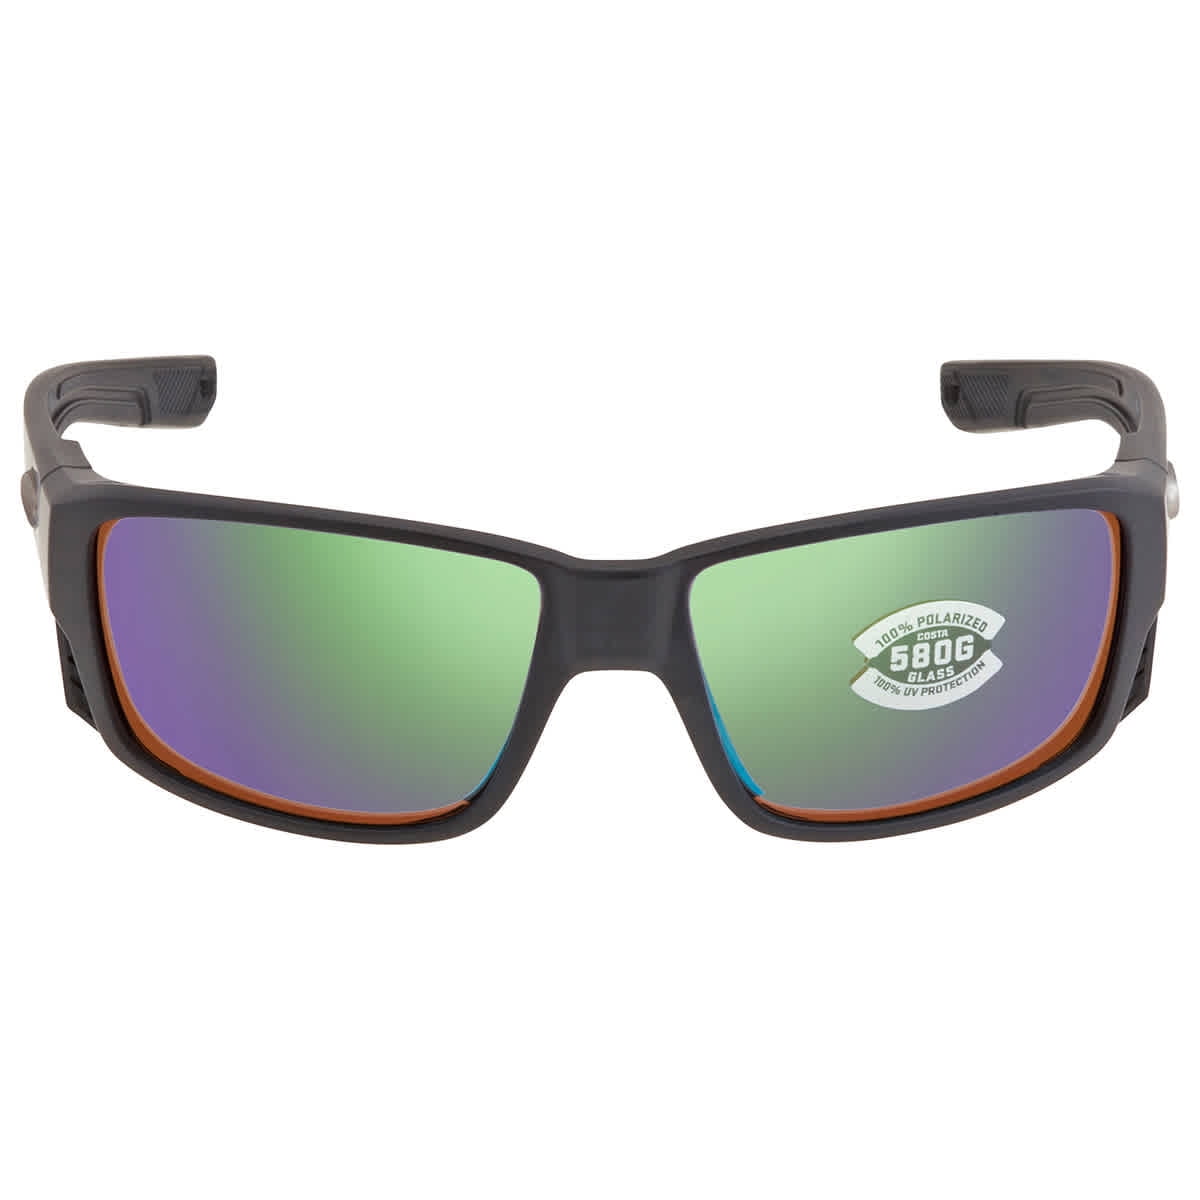  Costa Del Mar Men's Tuna Alley Pro Rectangular Sunglasses,  Black/Polarized Blue Mirrored 580G, 60 mm : Sports & Outdoors